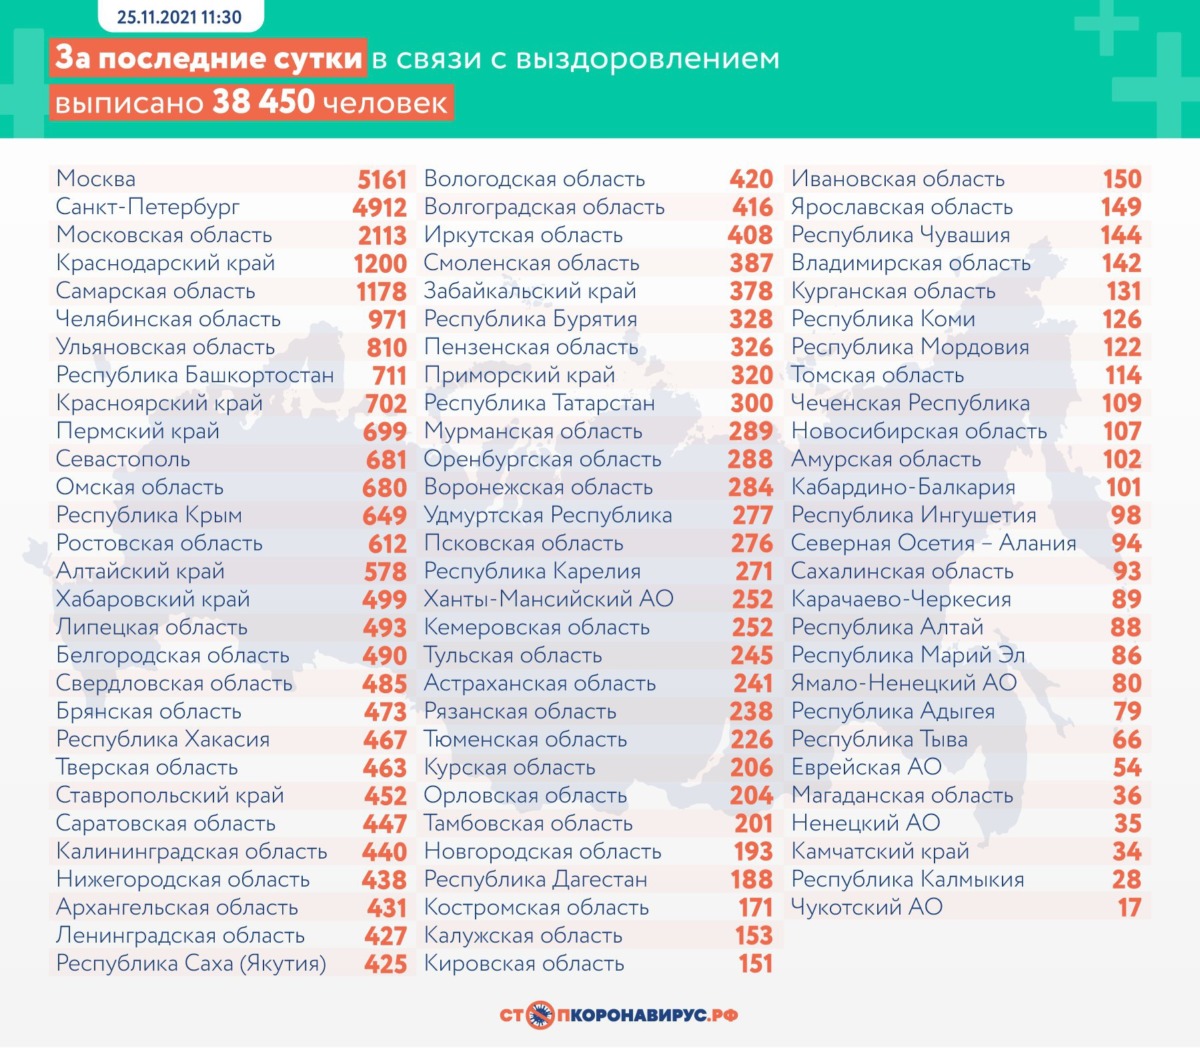 Оперативная статистика по коронавирусу в России на 25 ноября